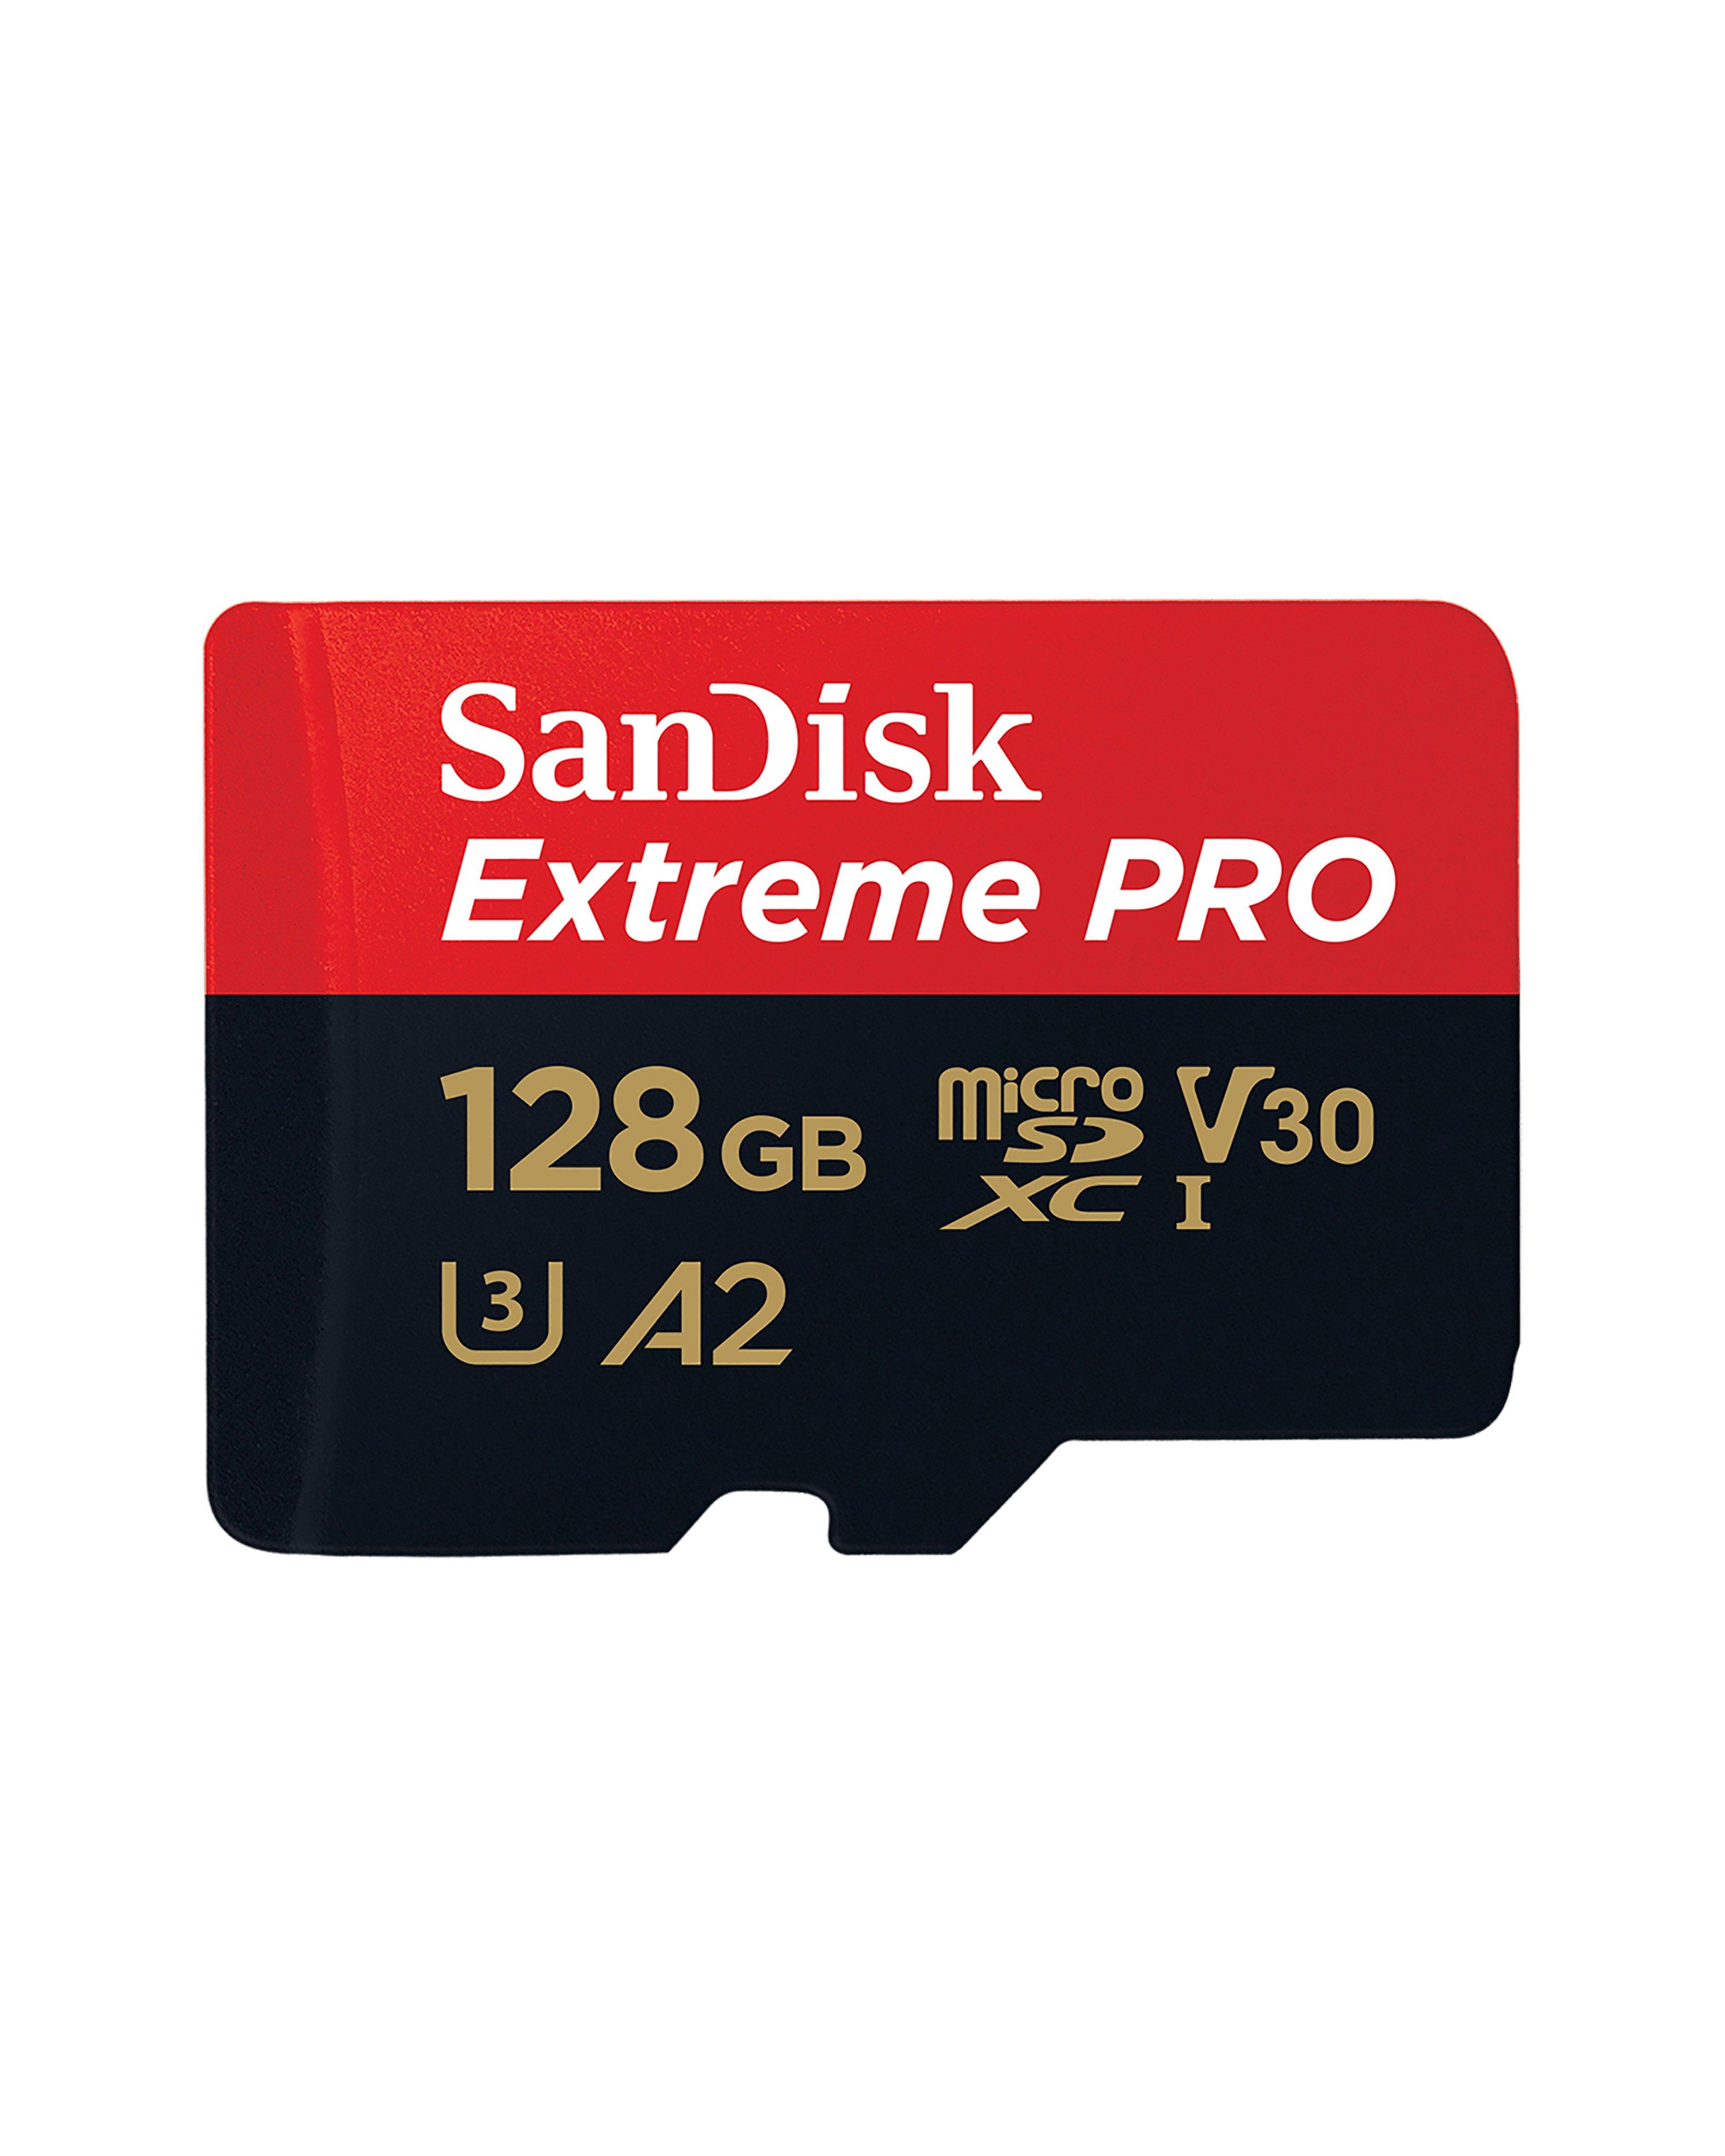 Sandisk Extreme Pro 128GB microSD UHS Memory Card -  Black